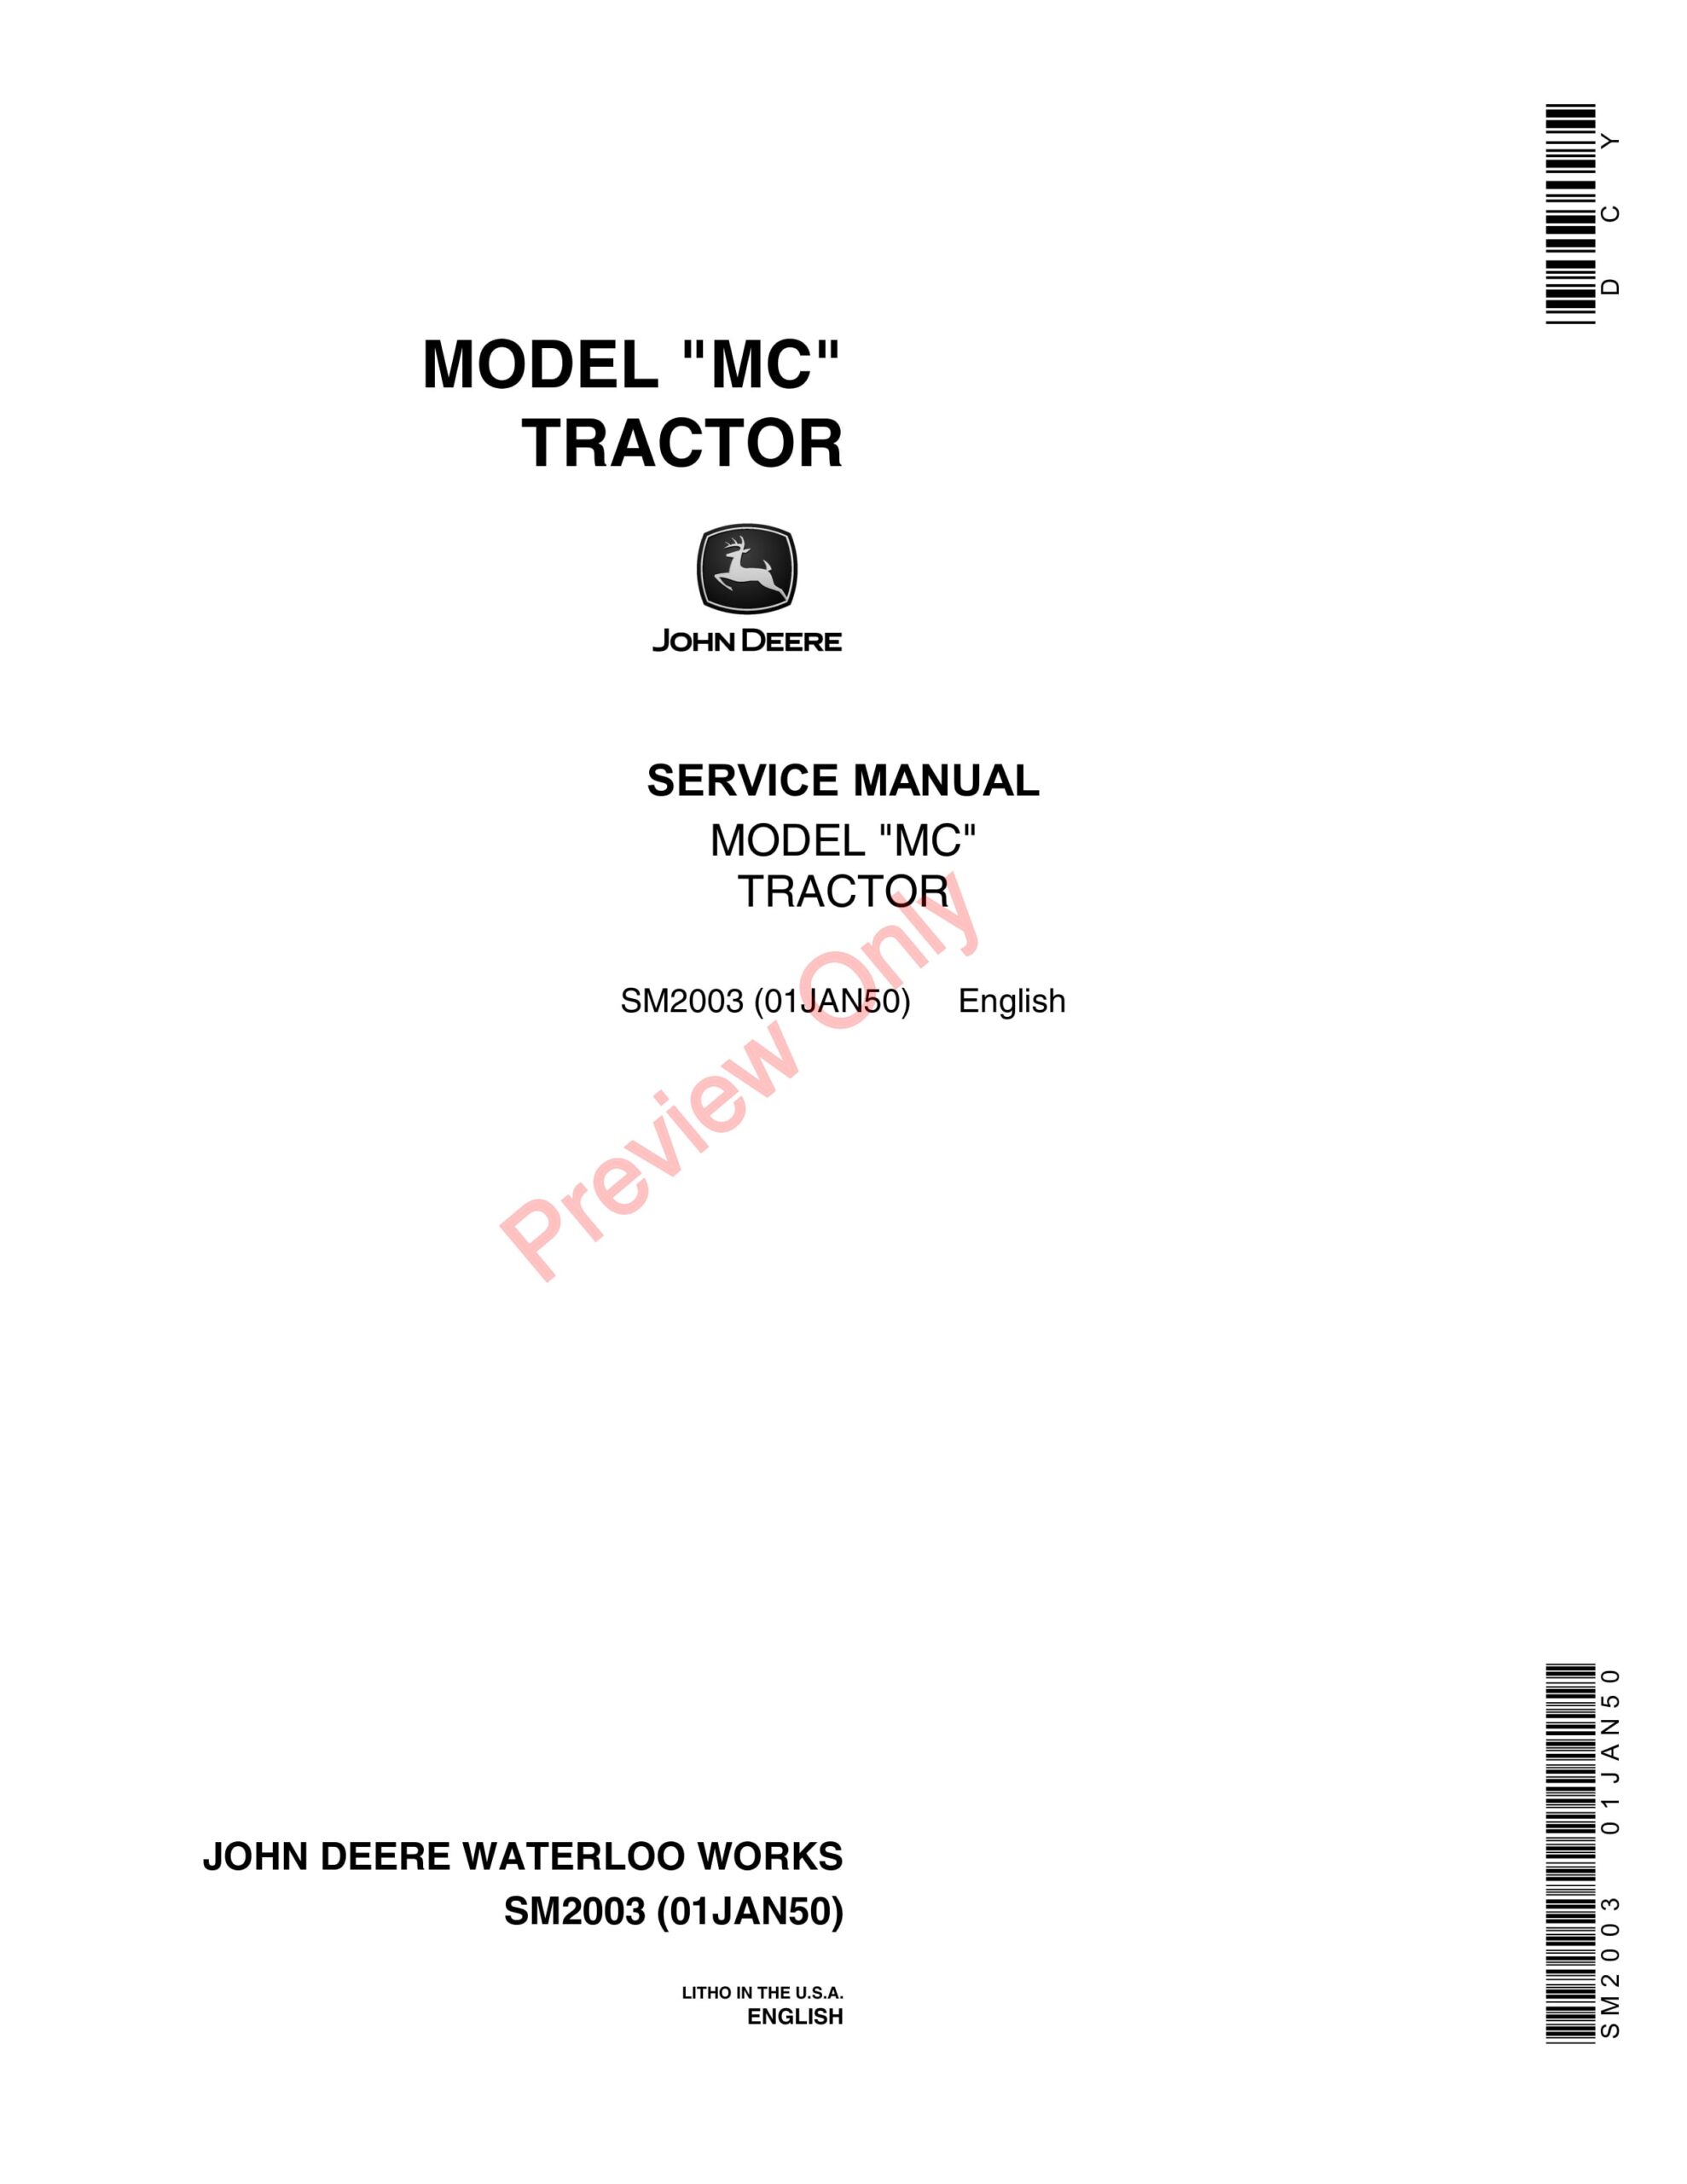 John Deere Model MC Tractor Service Manual SM2003 01JAN50-1